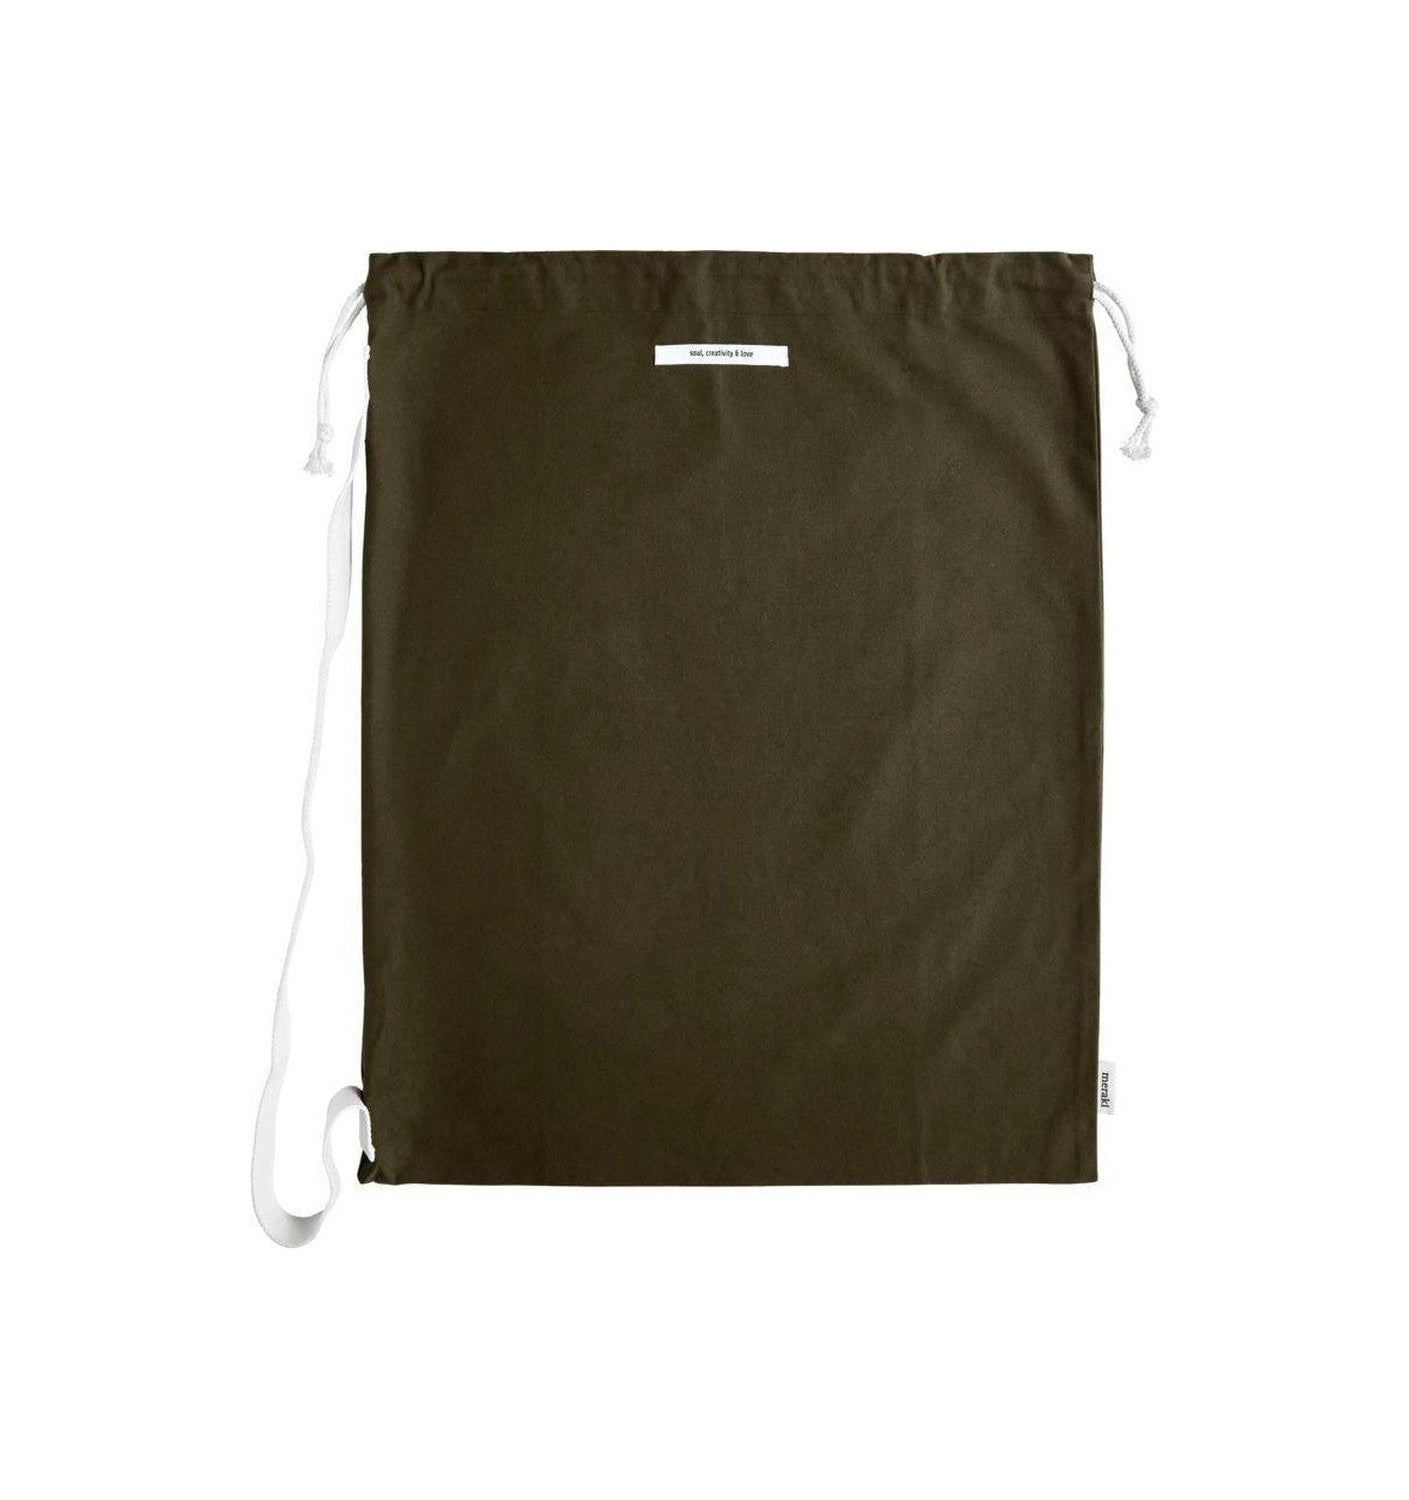 Meraki Cotton bag, MKCataria, Army green